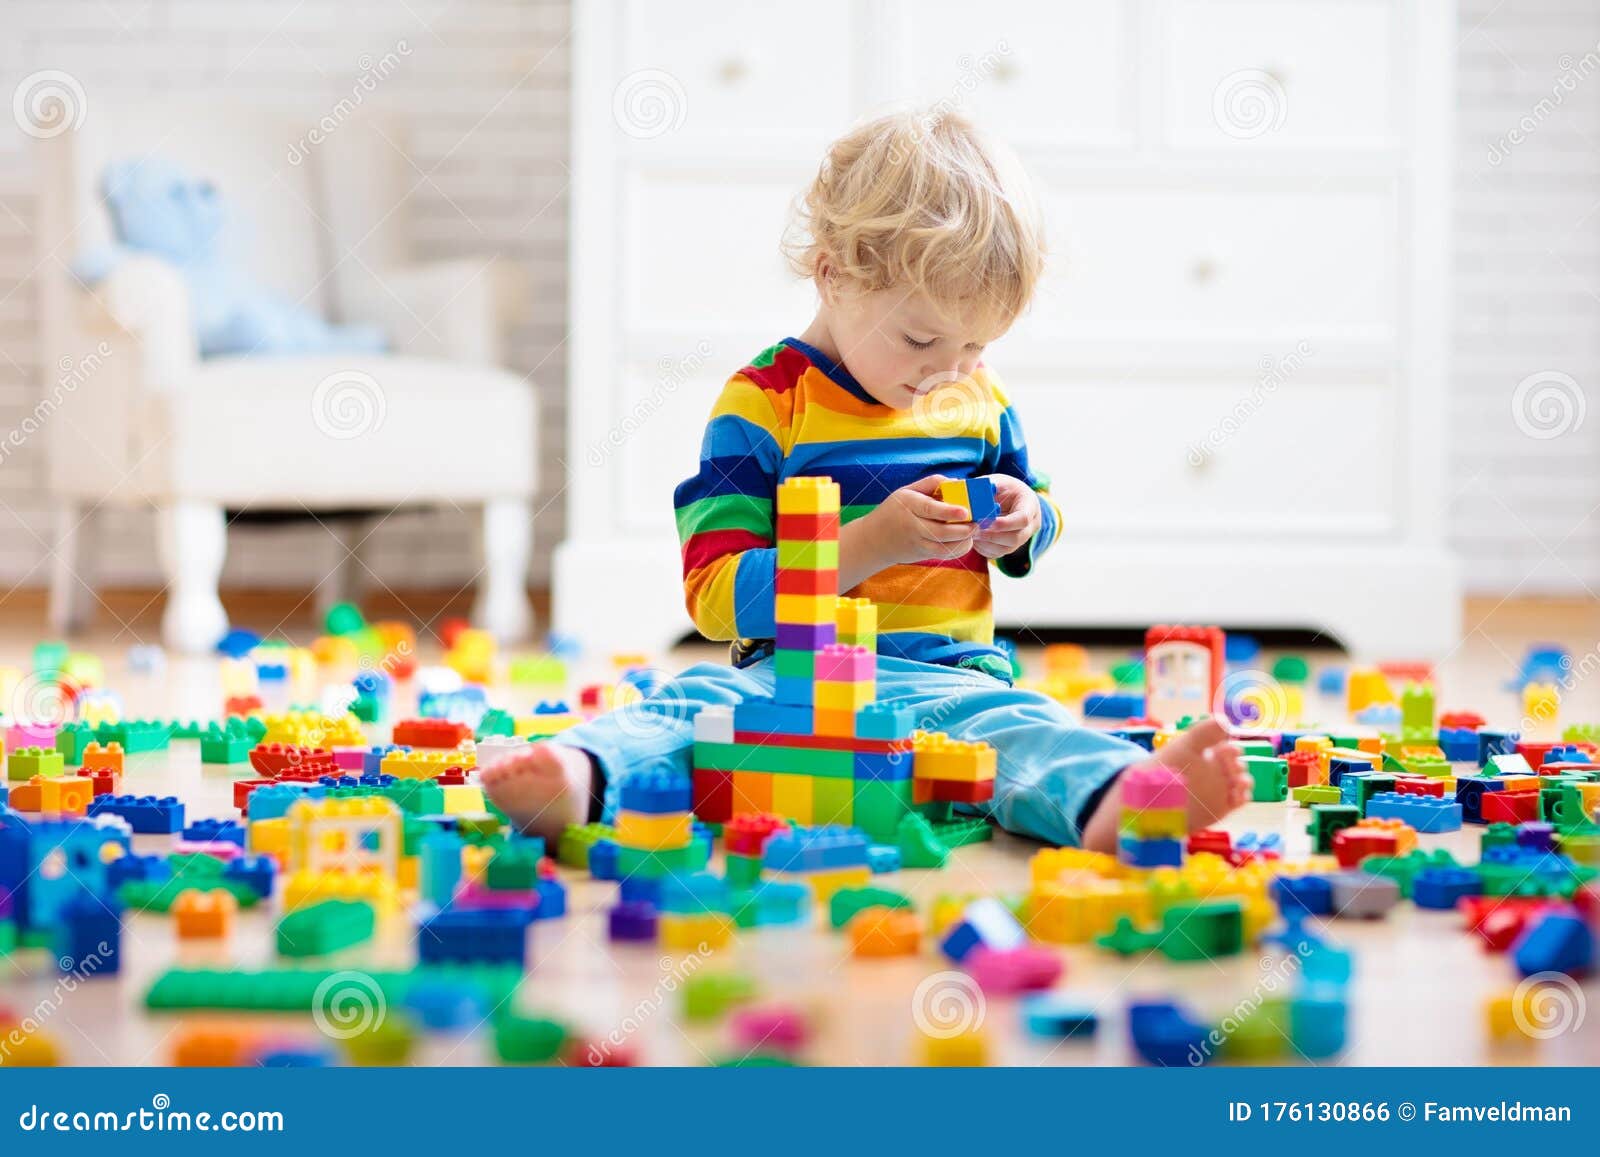 building block toys for children